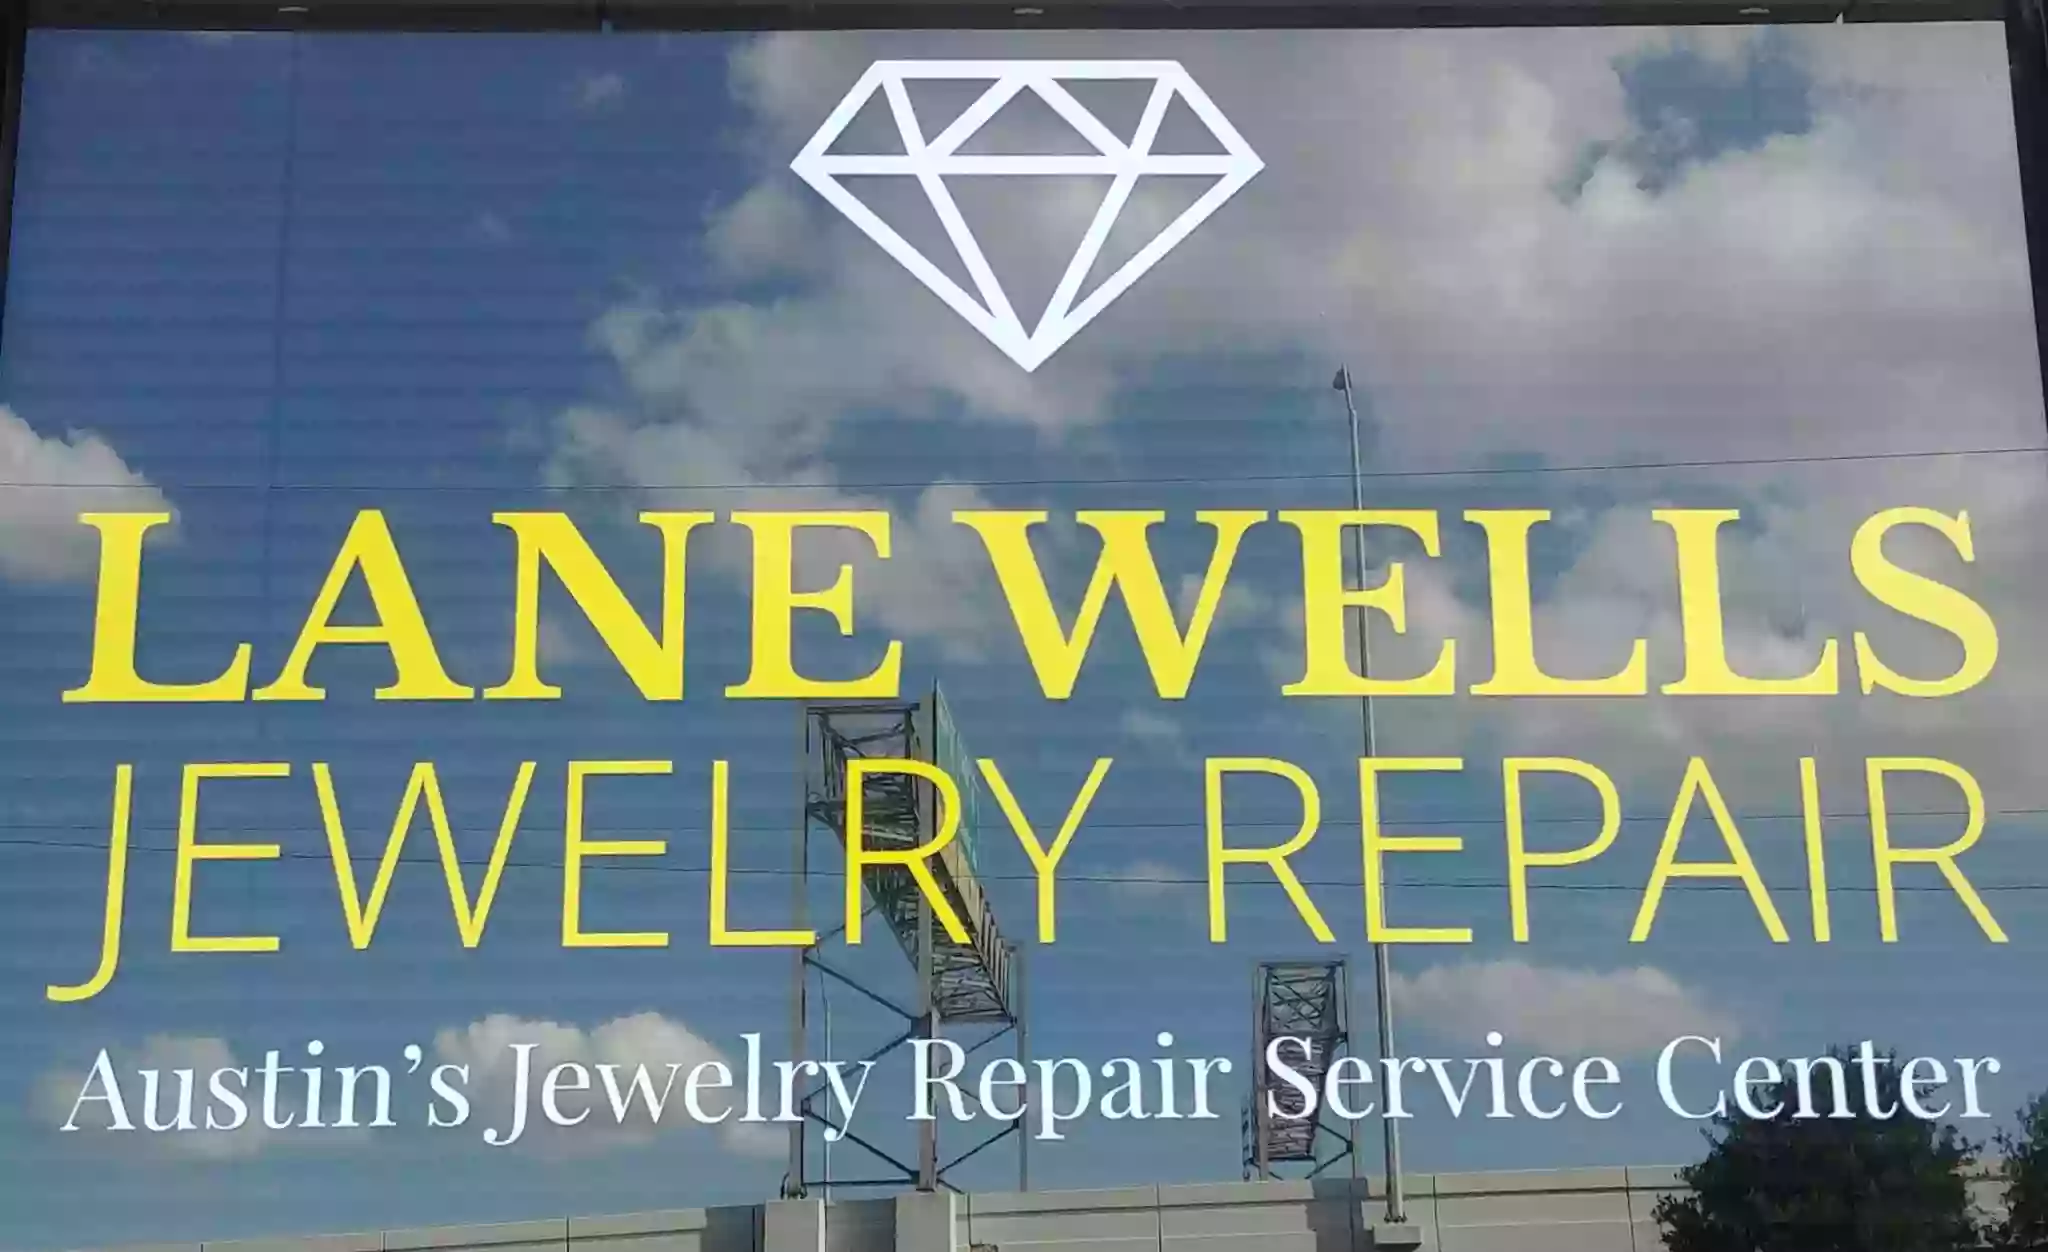 Lane Wells Jewelry Repair